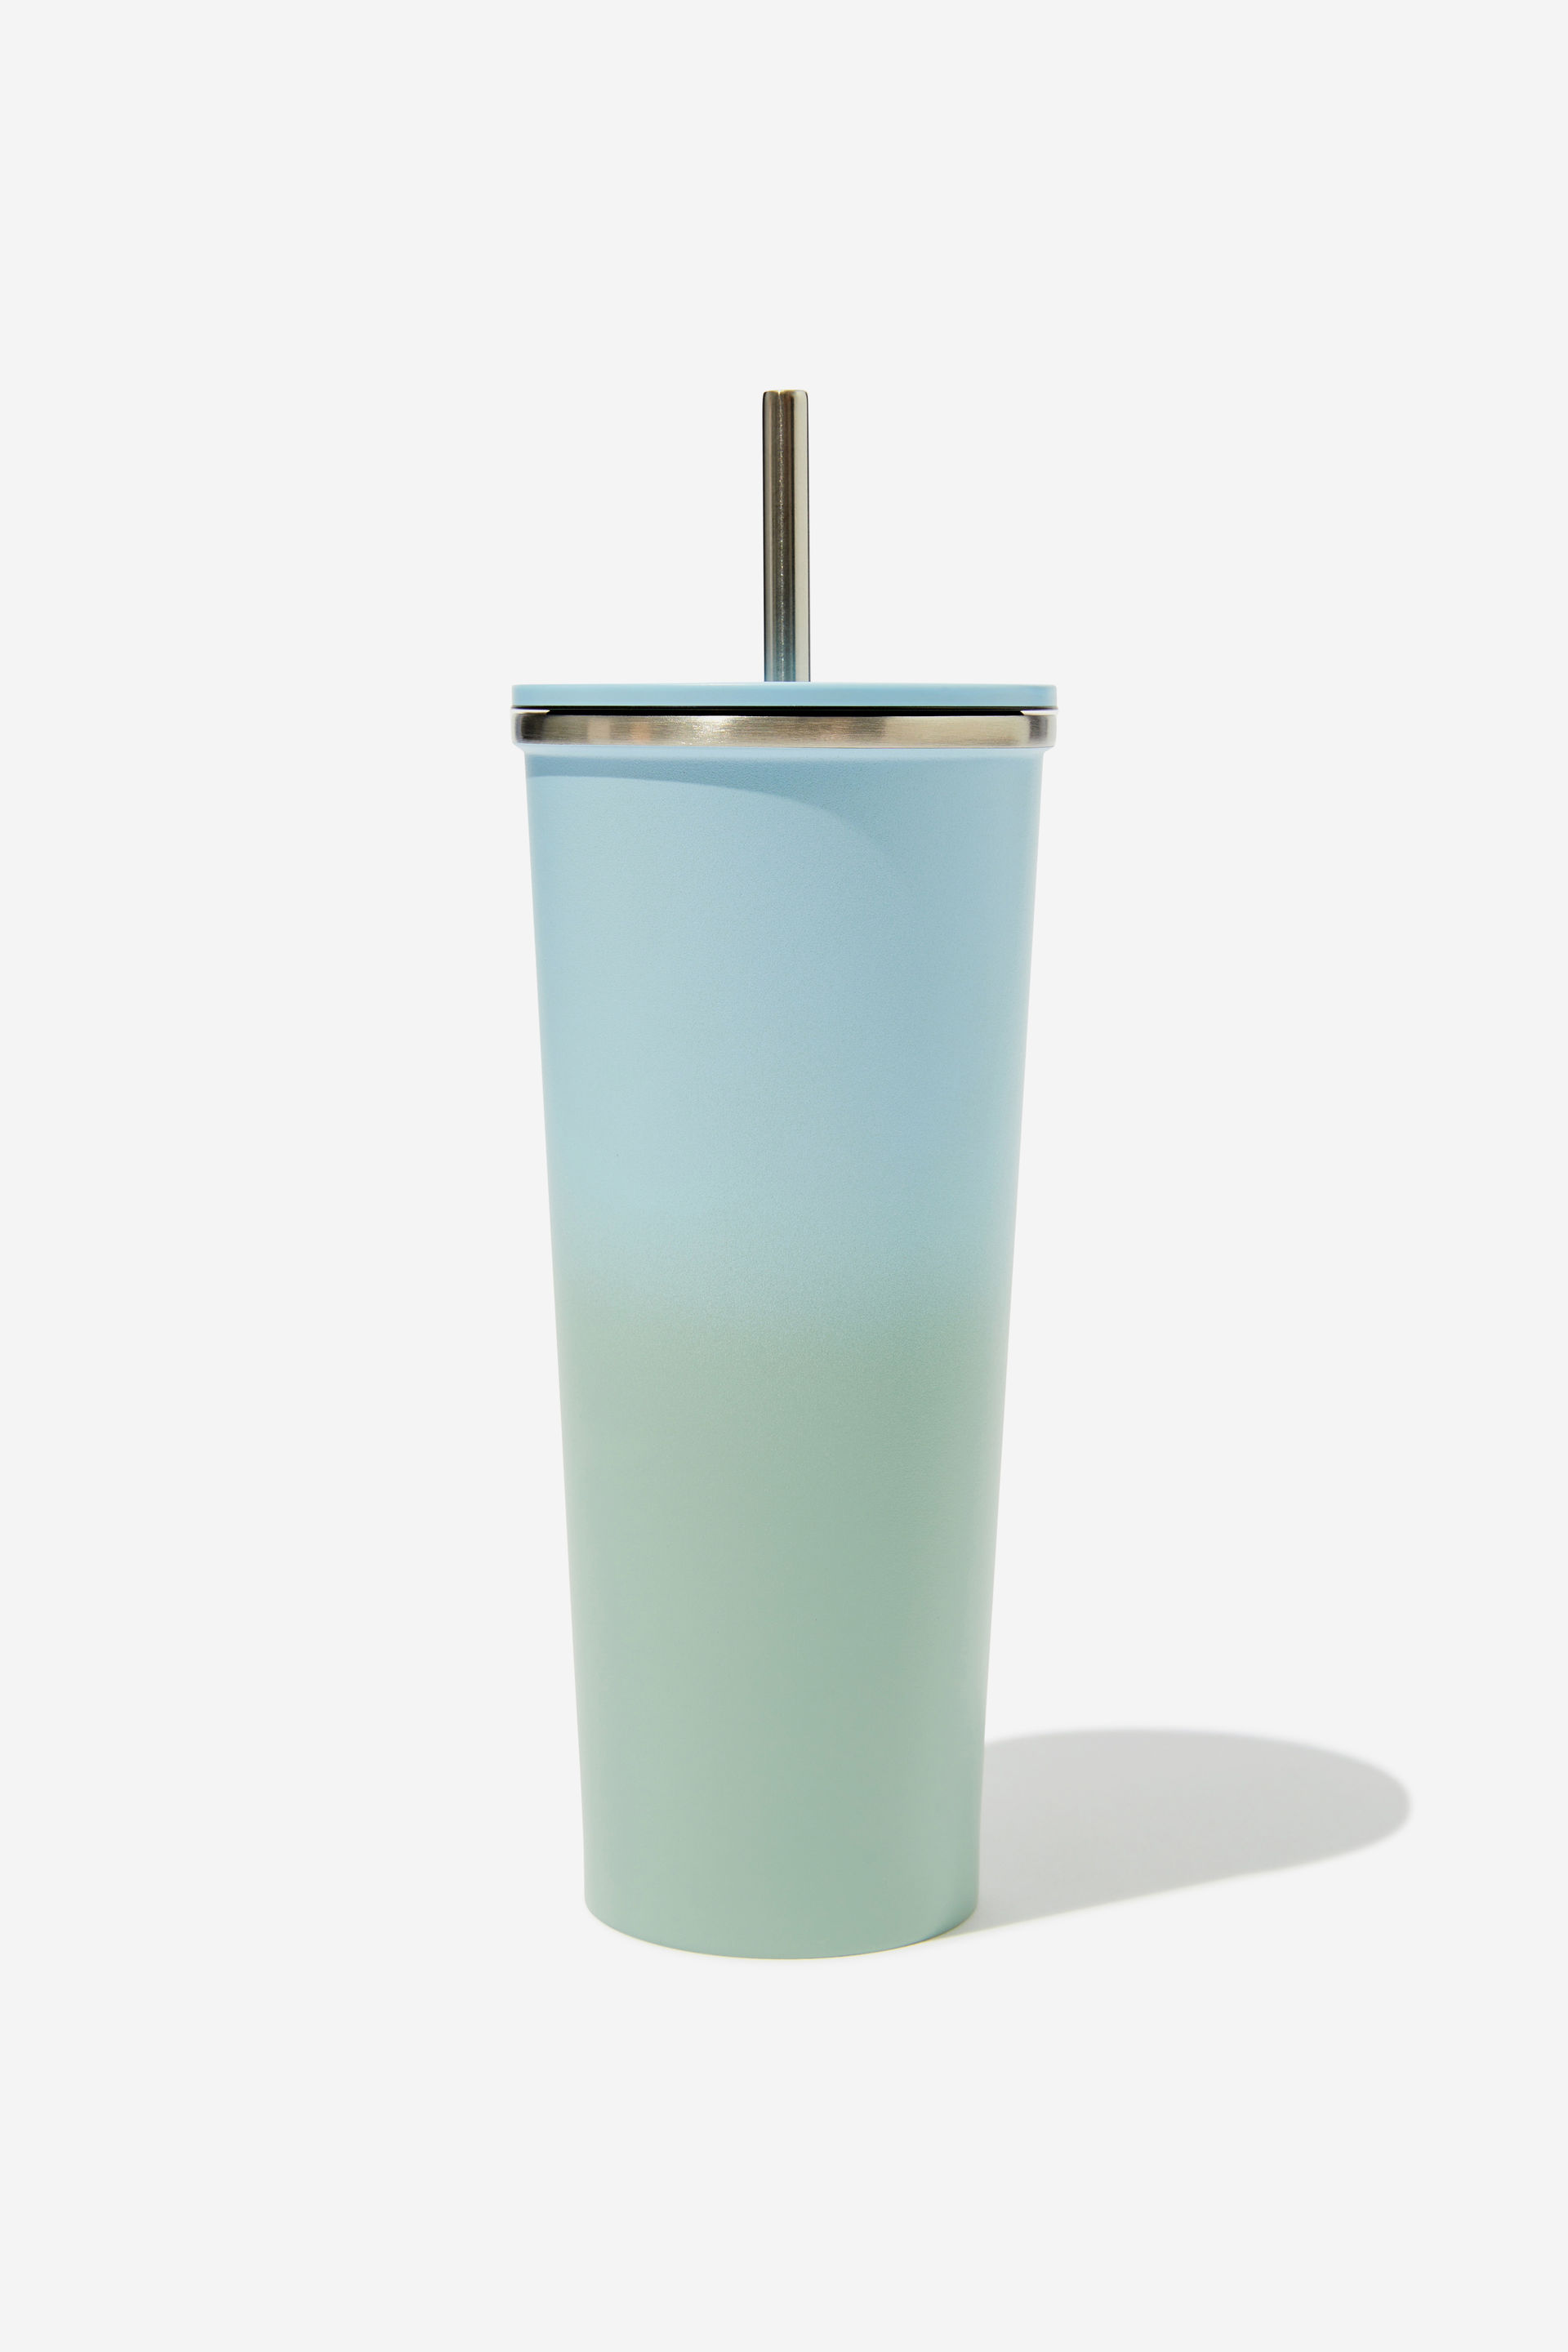 Typo - Metal Smoothie Cup - Arctic blue ombre